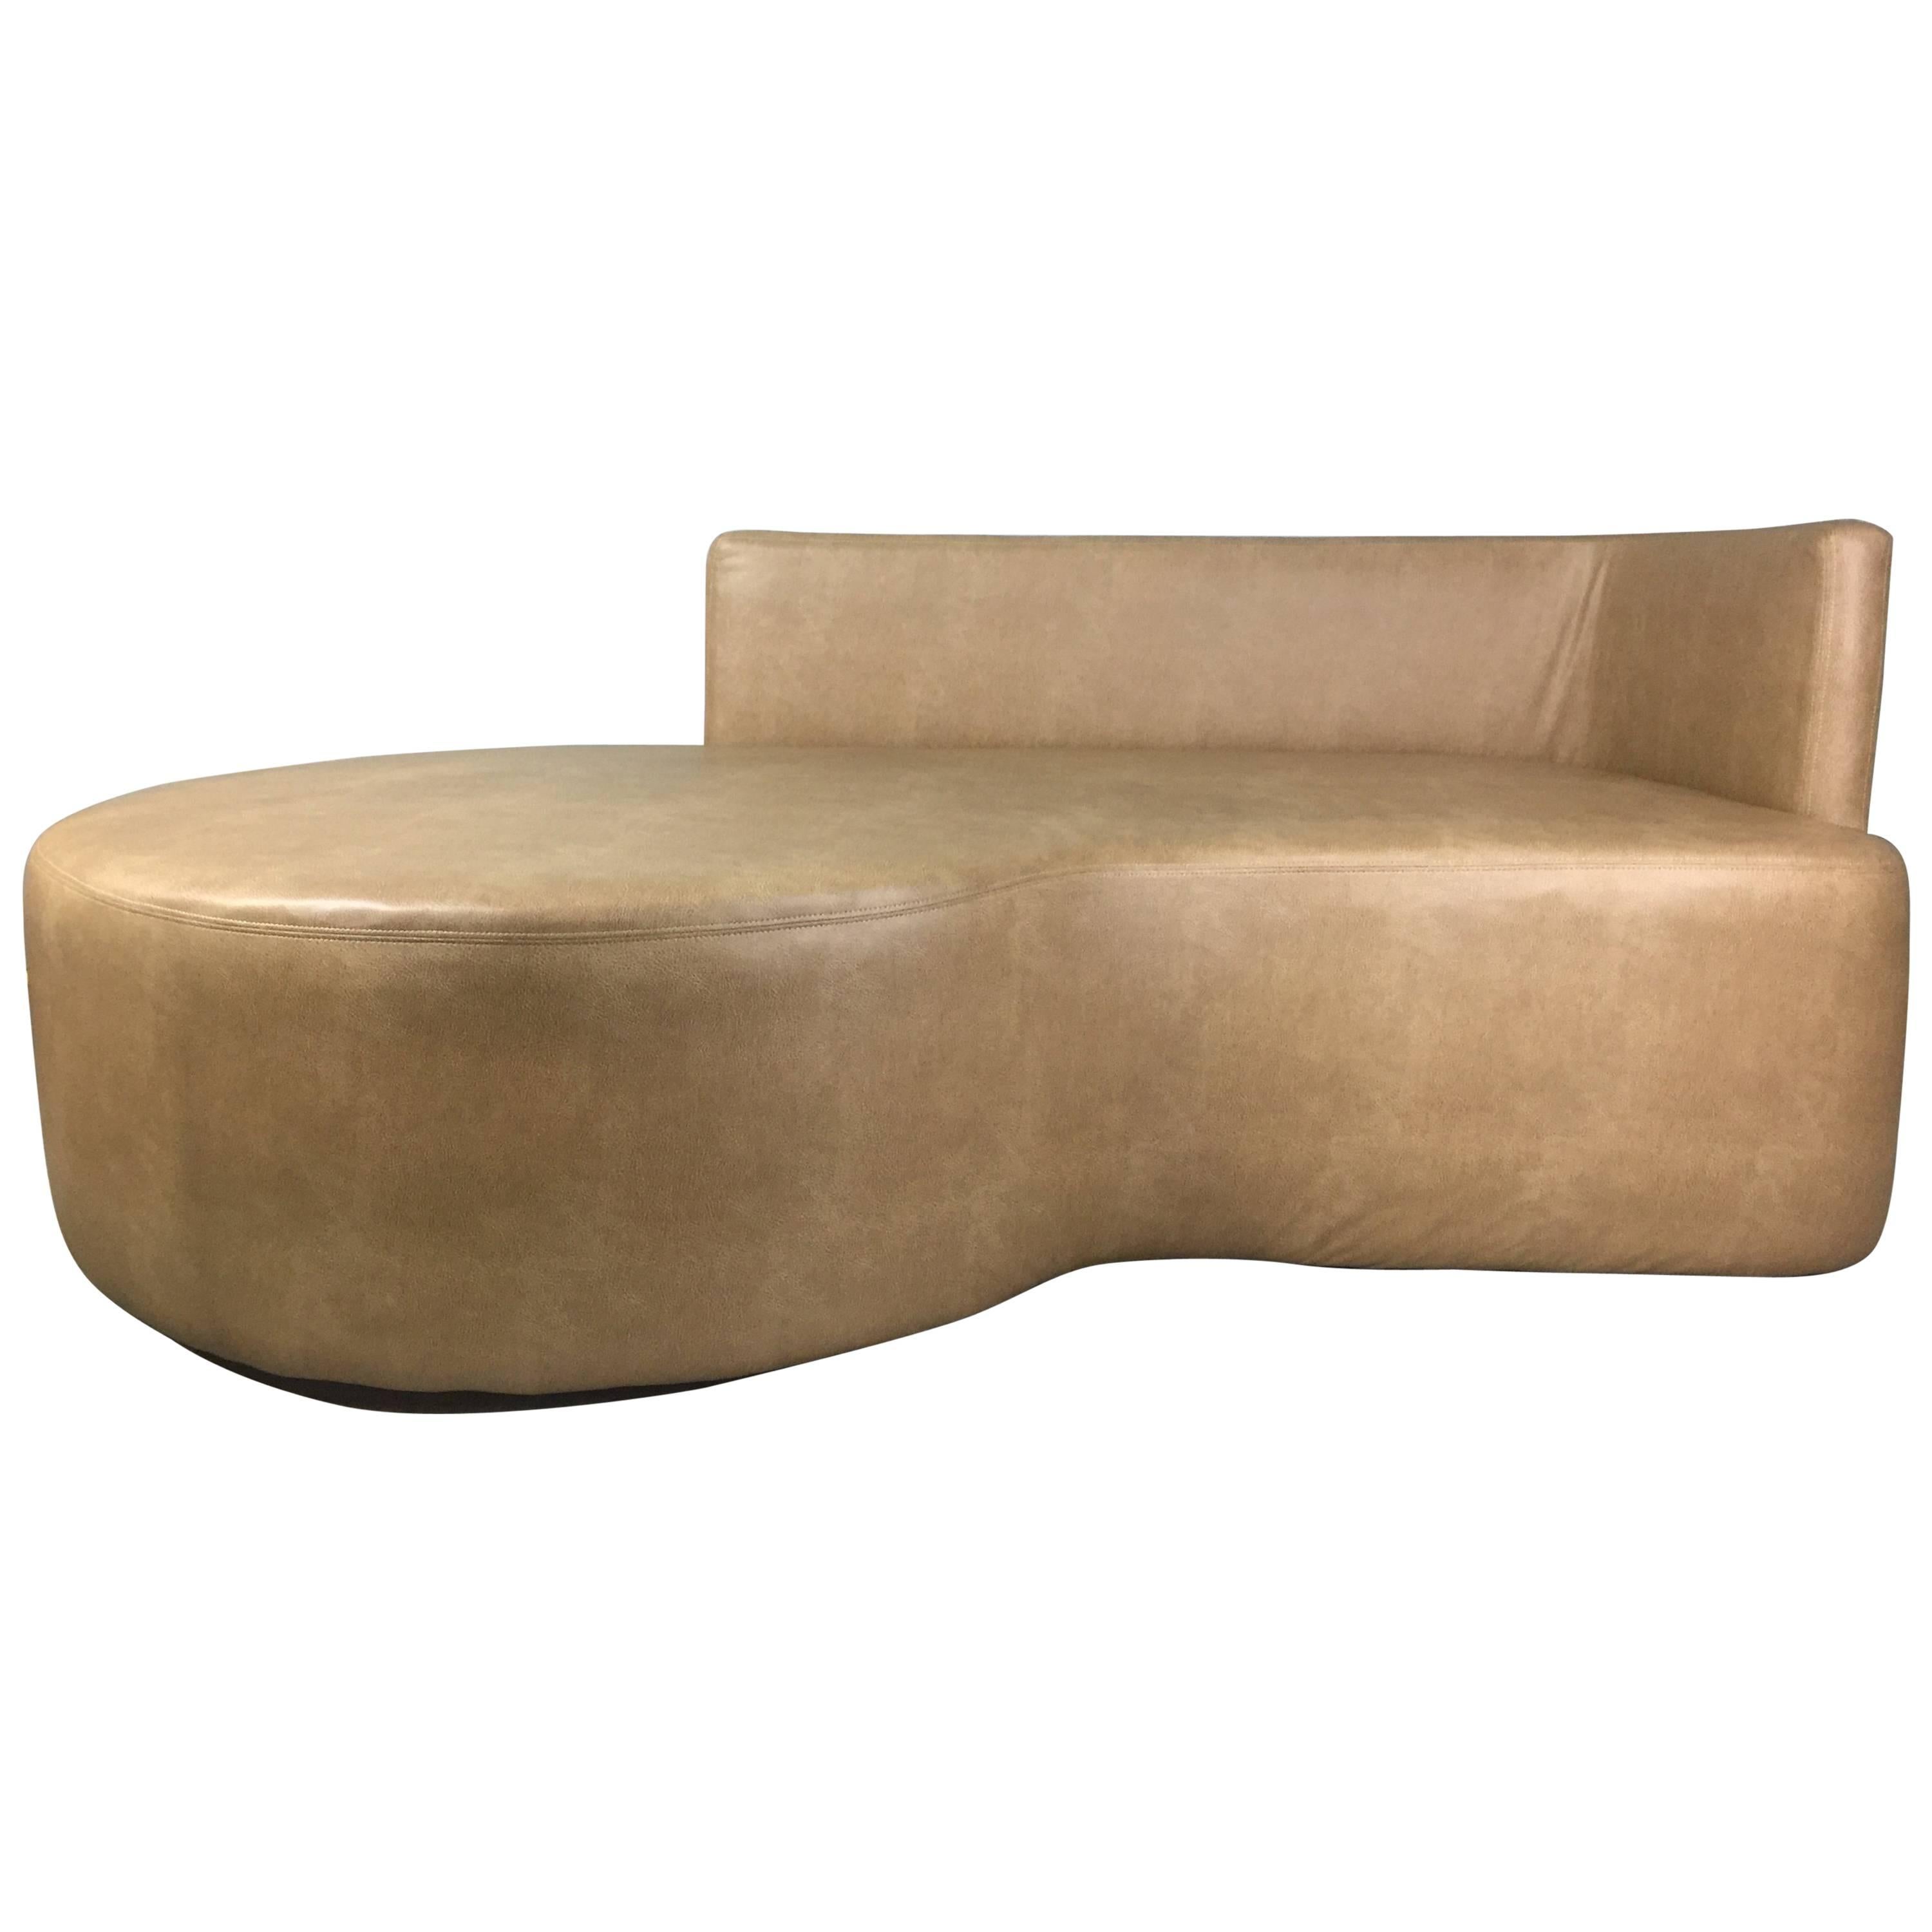 Kagan Style Saddle Calfskin Leather Sofa